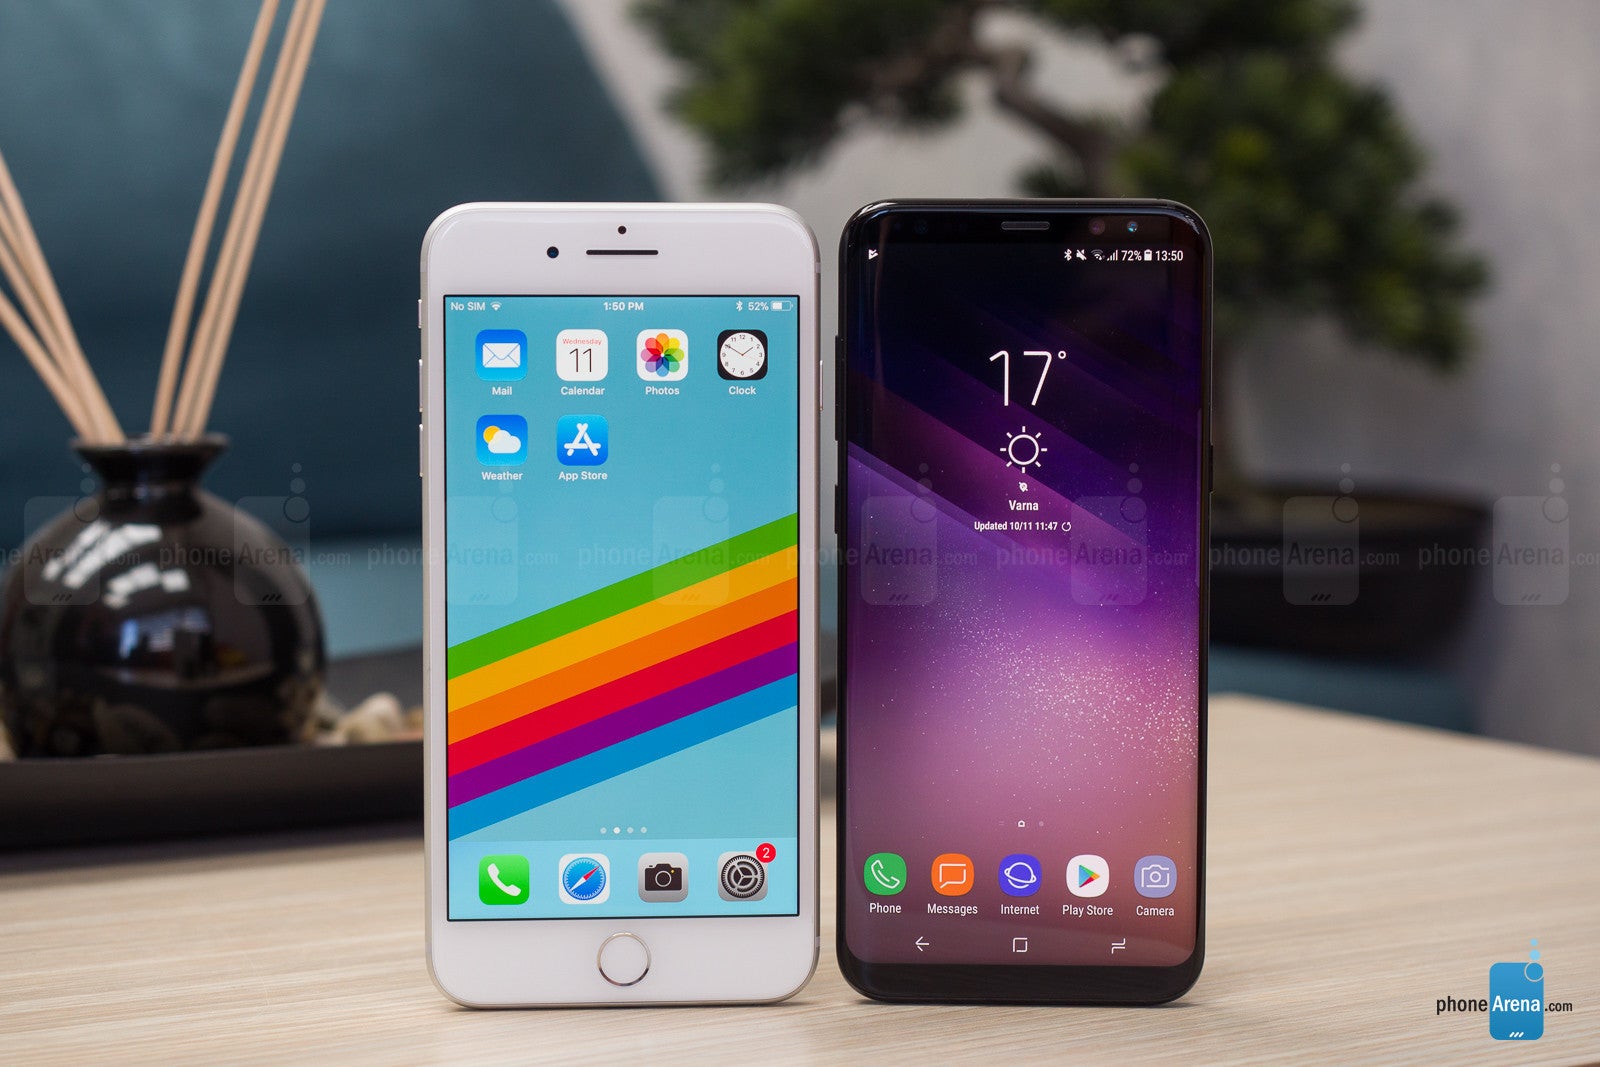 Iphone Samsung s8 Plus. Samsung Galaxy s8 iphone. Iphone 8s Plus. Samsung 8 iphone 8. Айфон 8 и 8 плюс сравнение